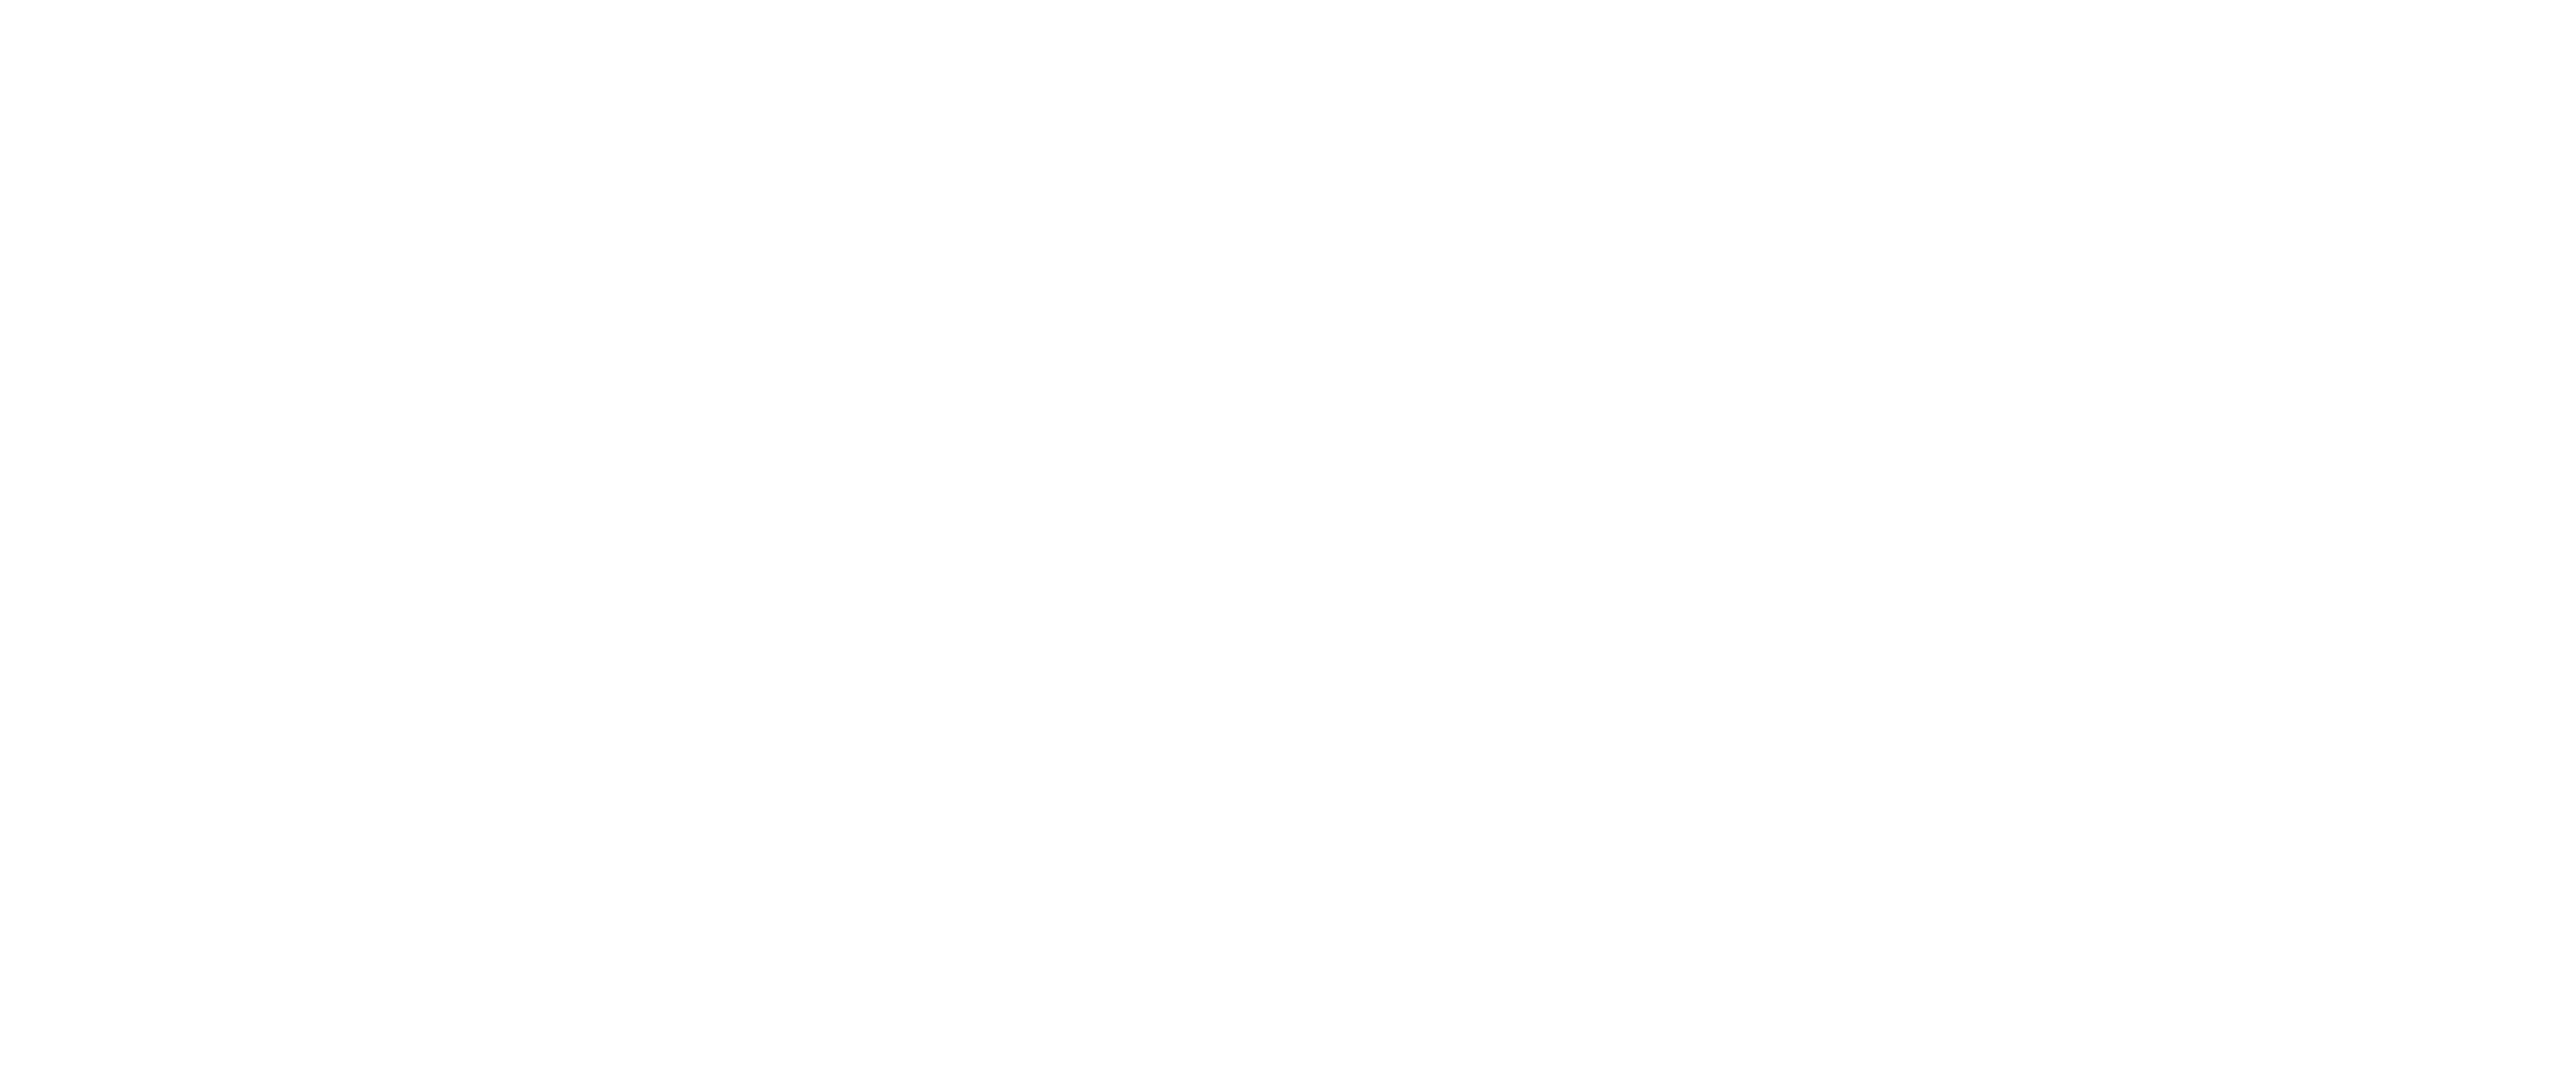 SmartBridge